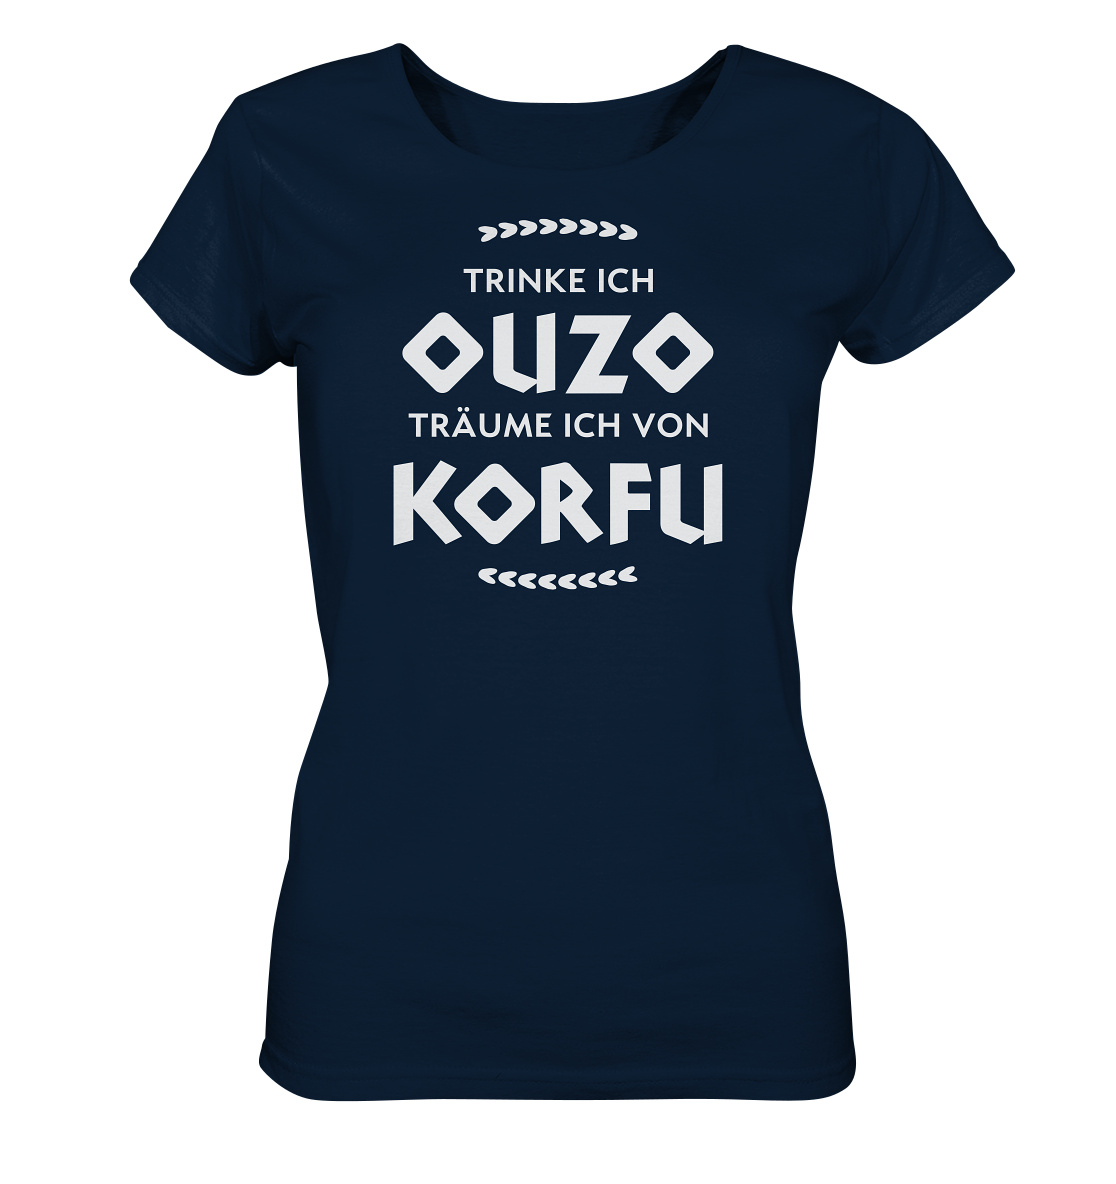 When I drink Ouzo I dream of Corfu - Ladies Organic Shirt